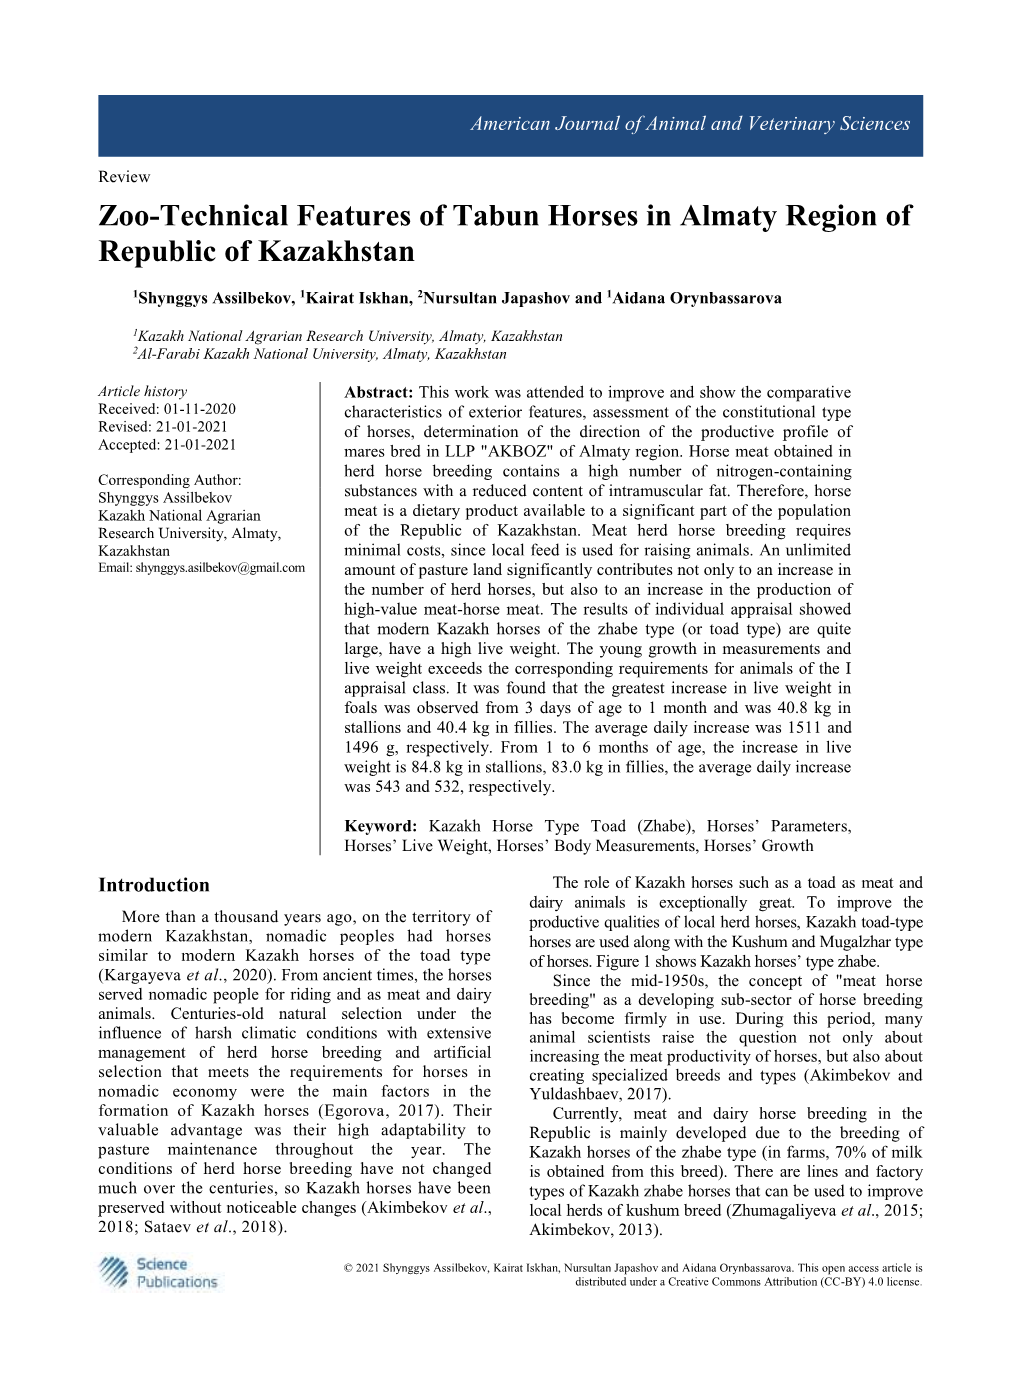 Zoo-Technical Features of Tabun Horses in Almaty Region of Republic of Kazakhstan